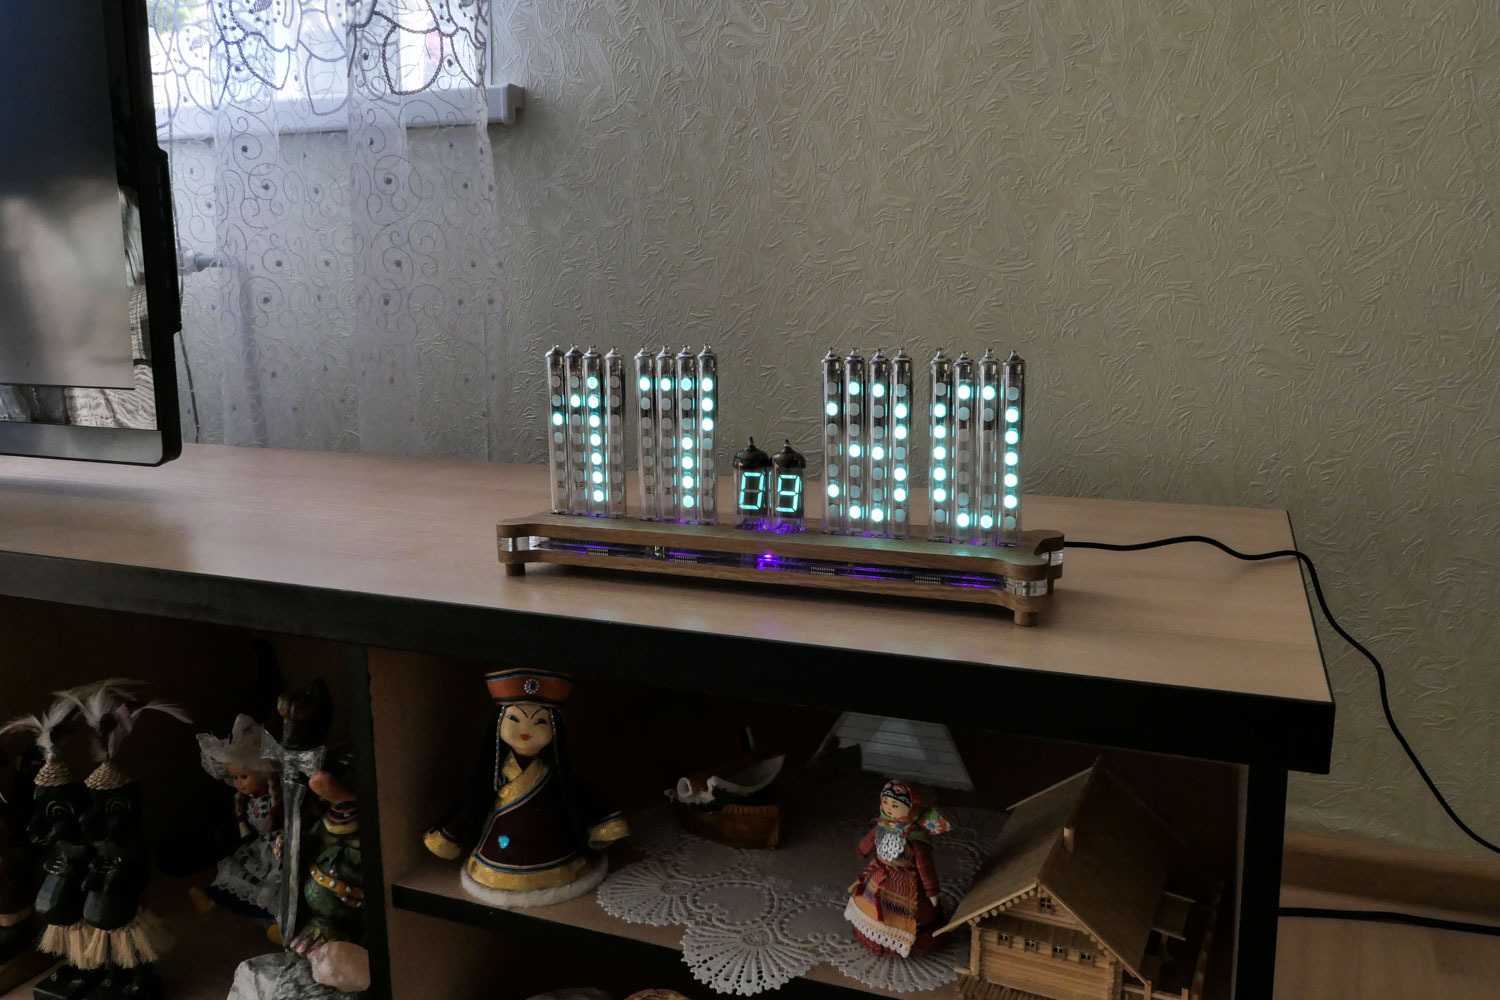 Wi-Fi Marusya matrix desk clock with VFD IV-26 tubes in wooden case